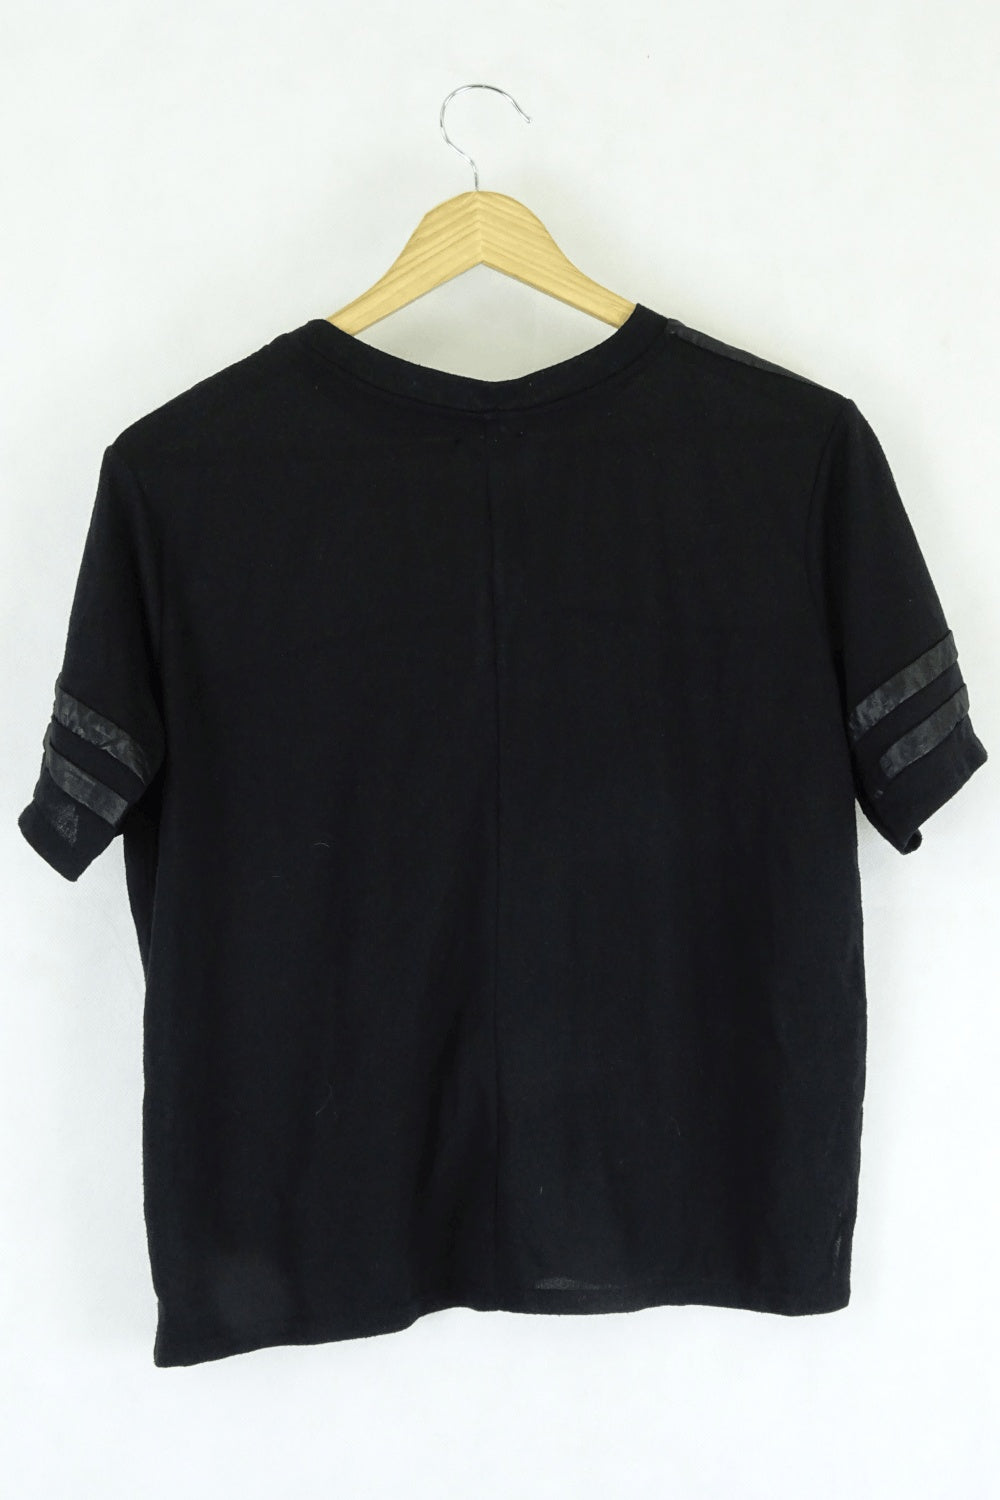 Zara Black T-Shirt M